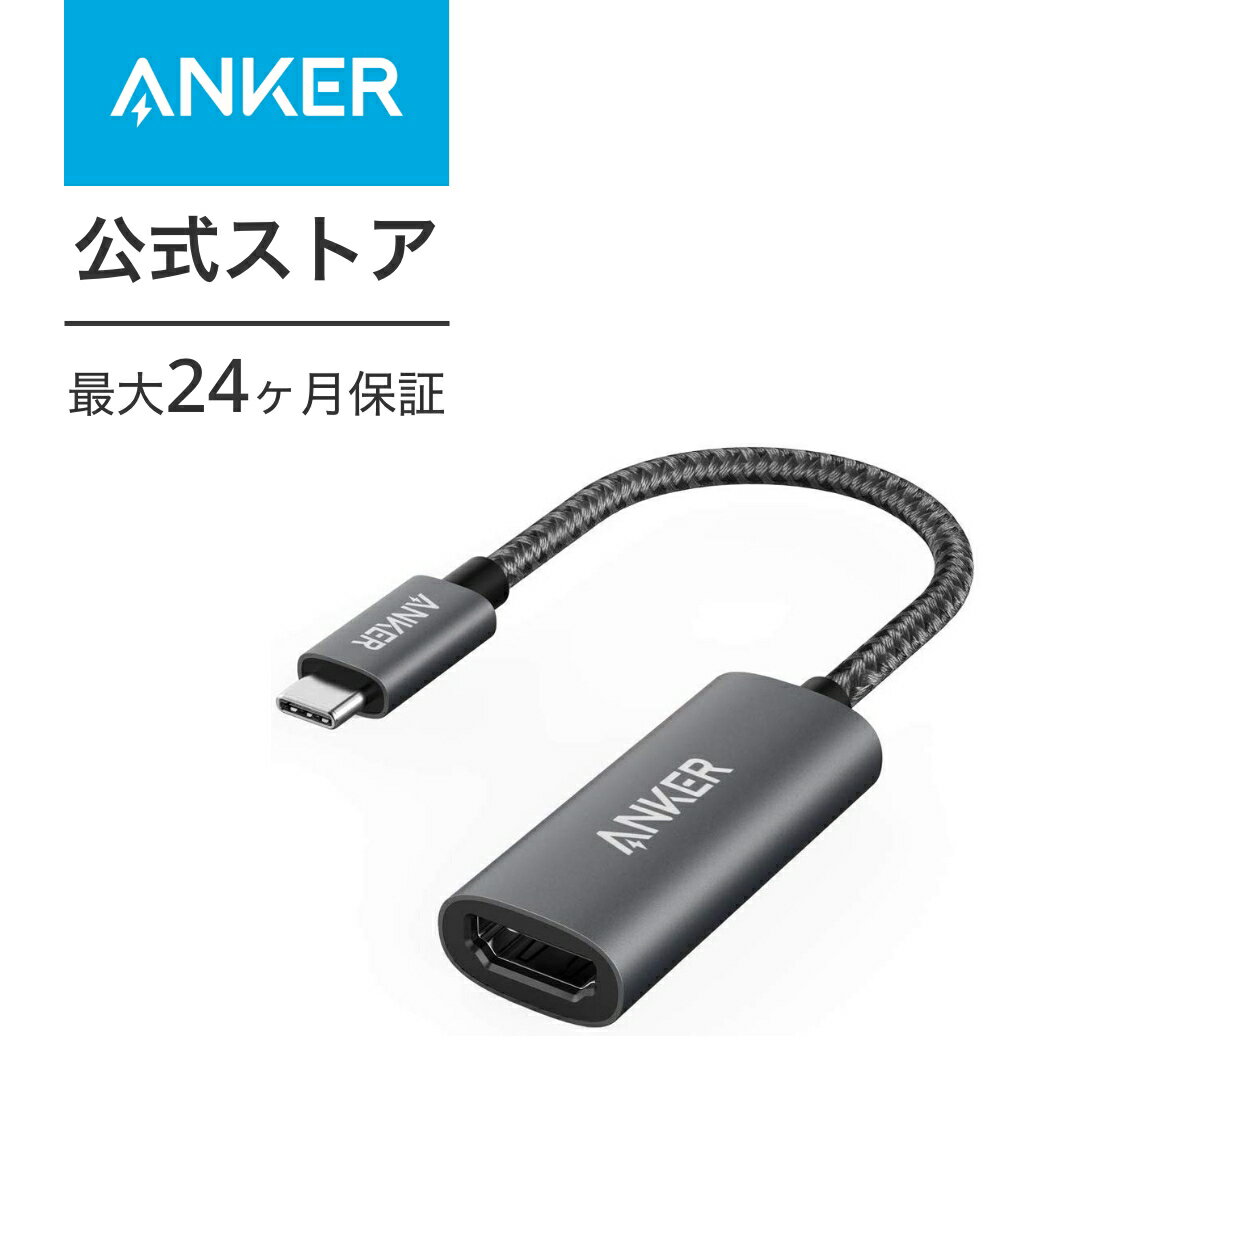 Anker PowerExpand+ USB-C & HDMI Ѵץ4K / 60Hzб Macbook Pro/MacBook Air/iPad Pro/Chromebook/Pixel/XPS/Galaxy ¾б